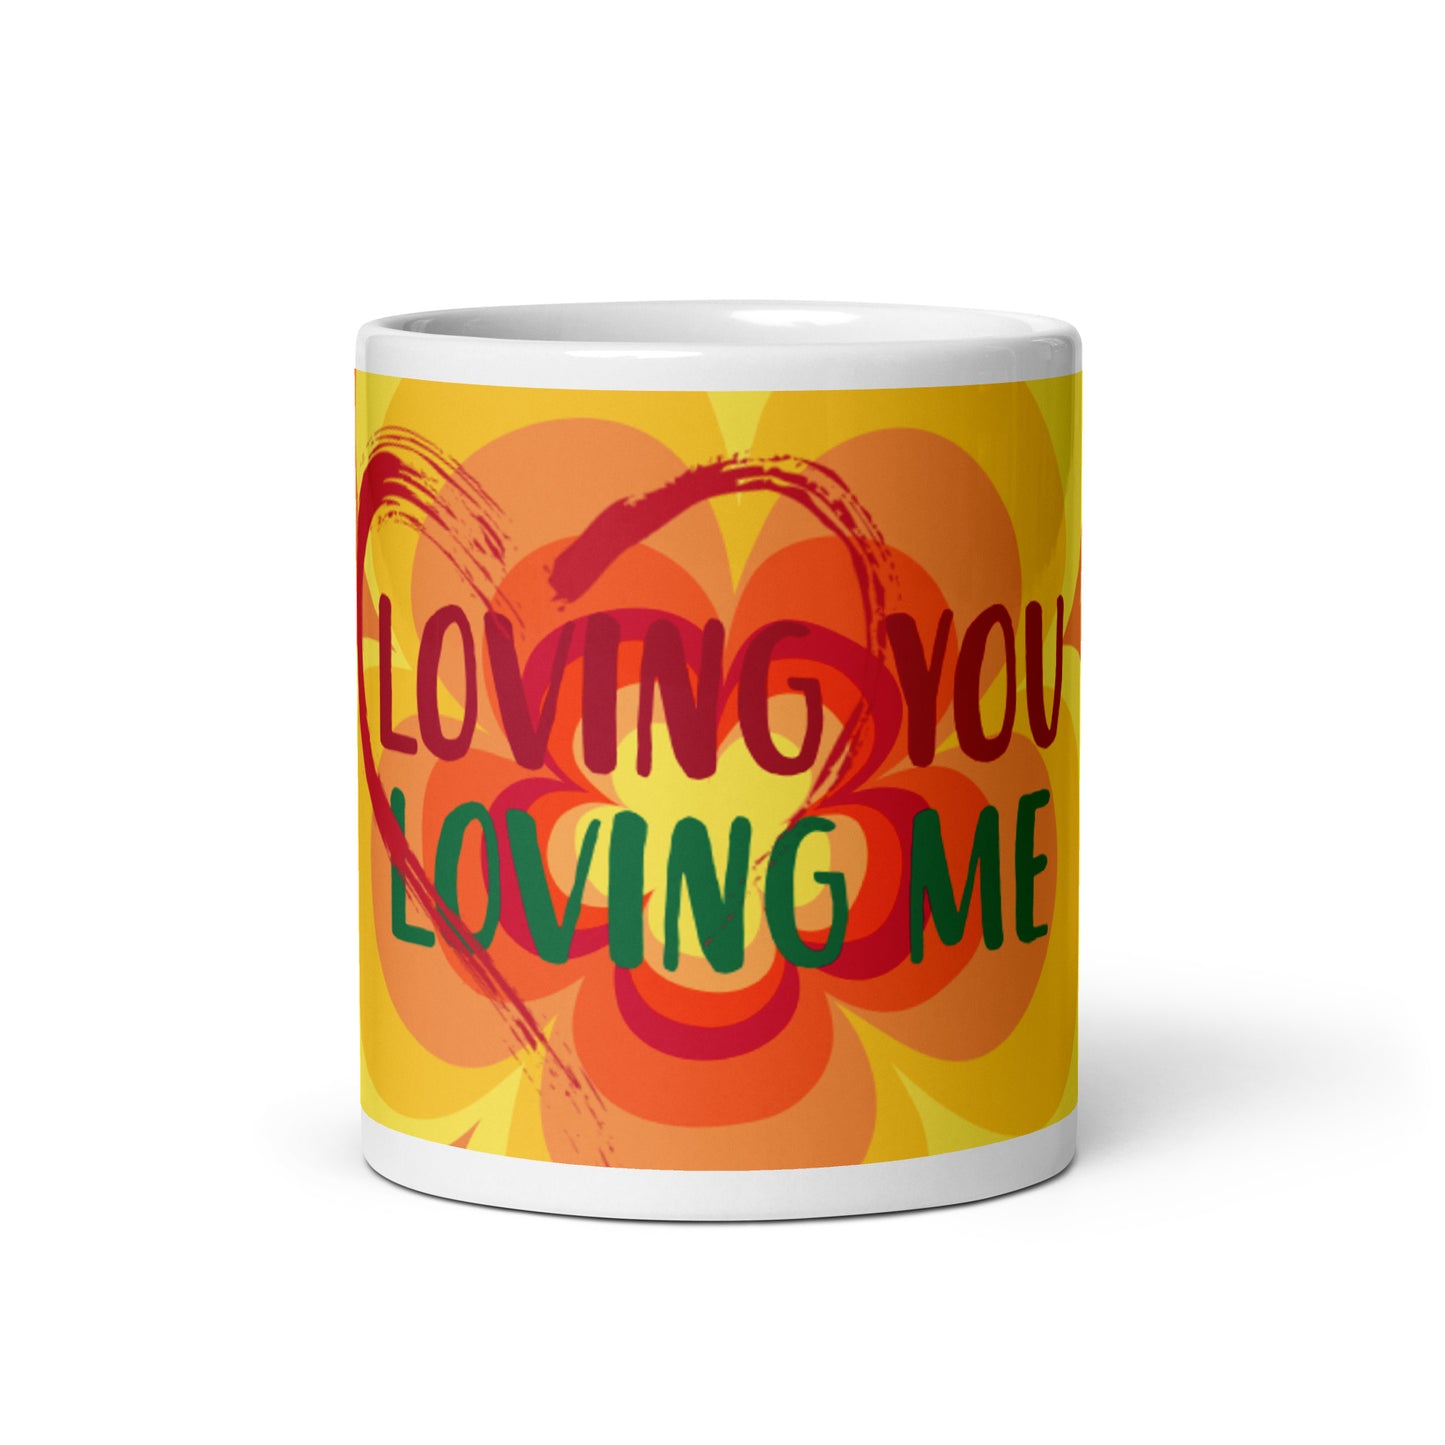 Sunny Flower 2 Mug blanc brillant - Loving you Loving me